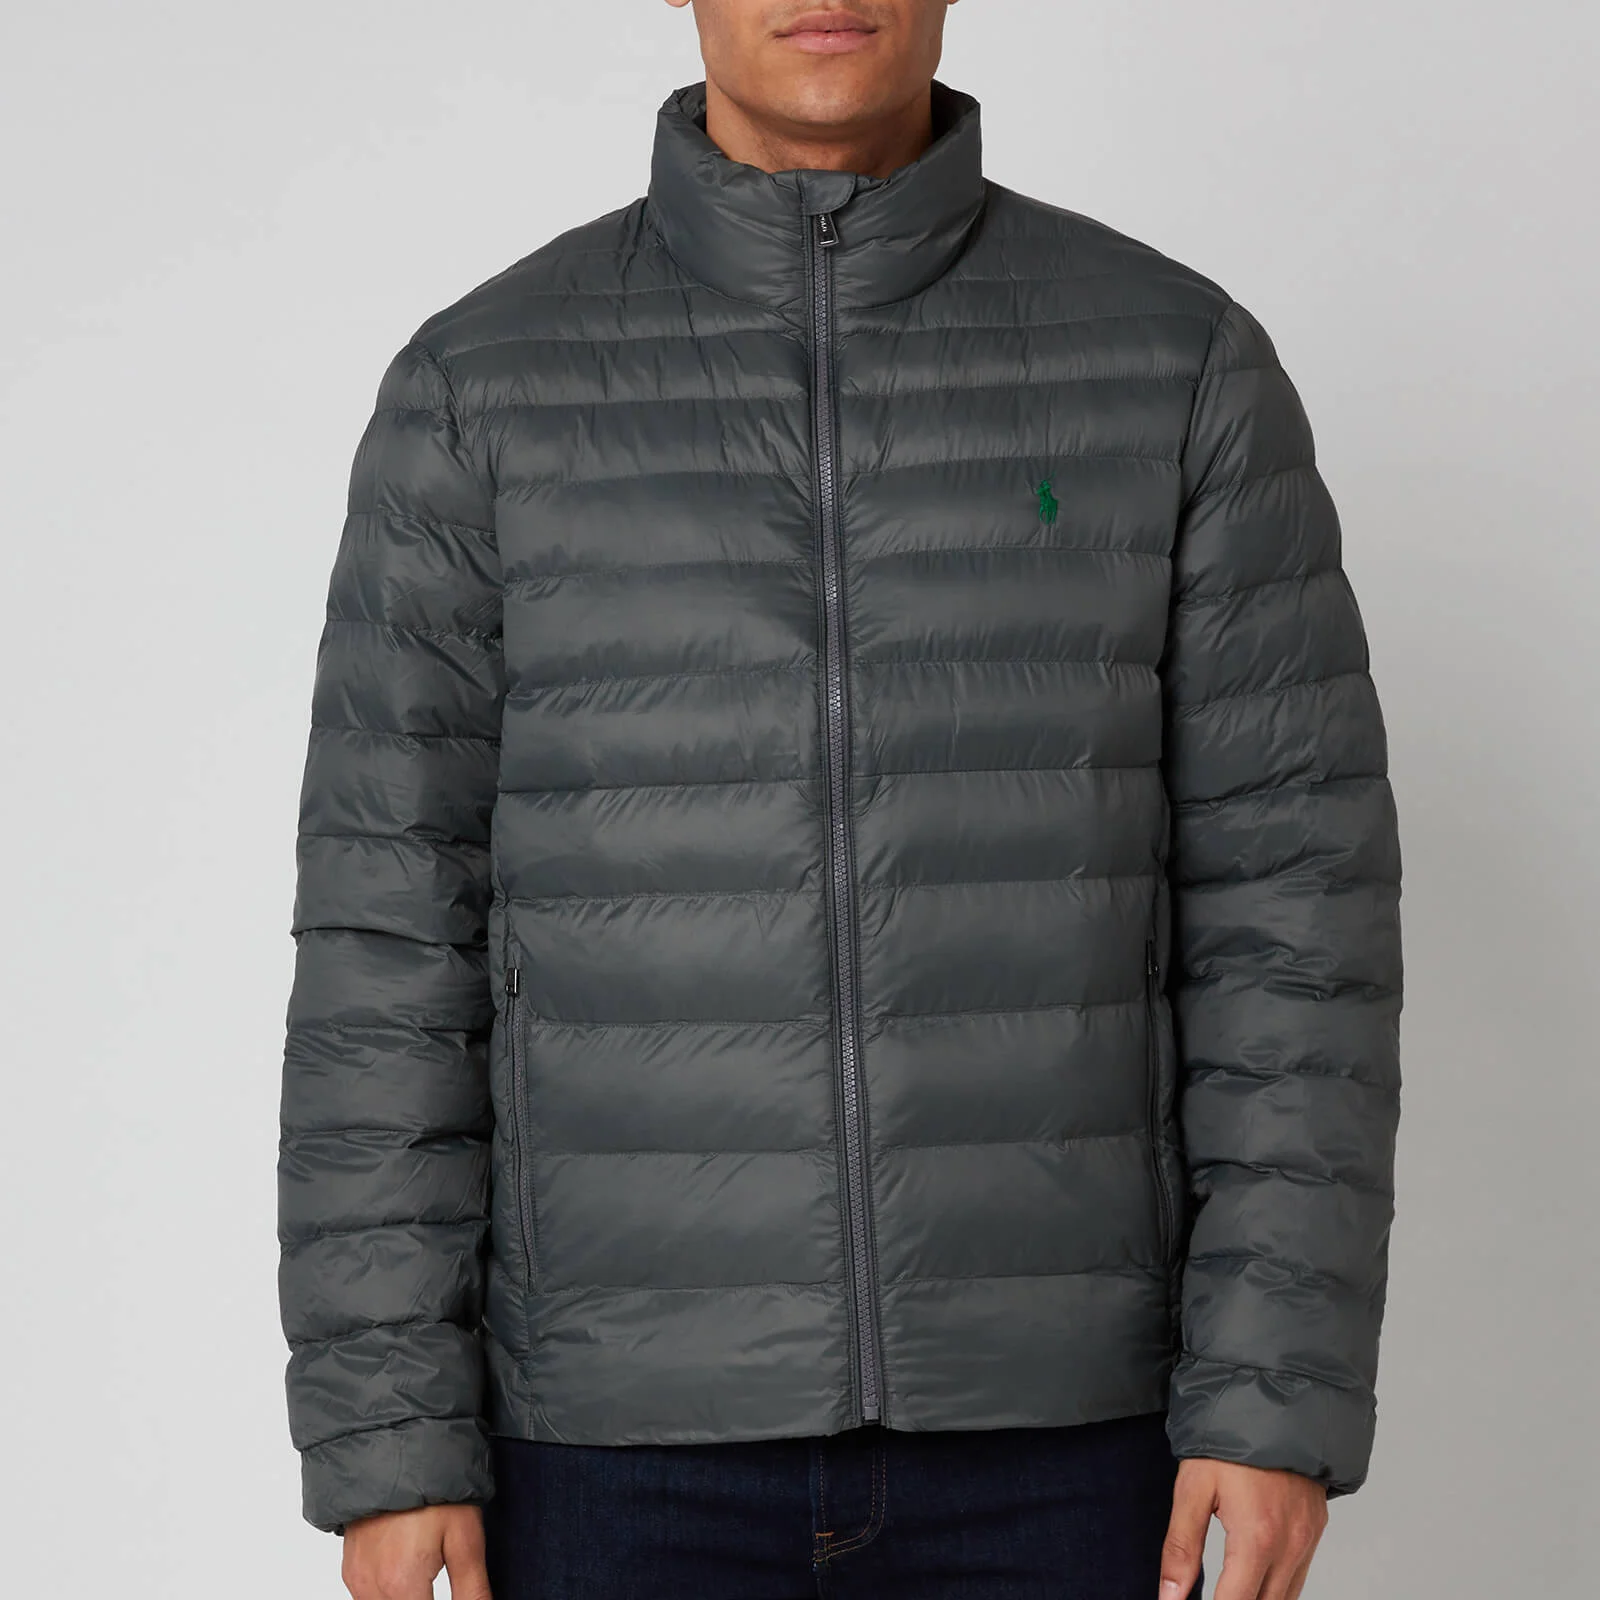 Polo Ralph Lauren Men's Recycled Nylon Terra Jacket - Charcoal Grey Image 1